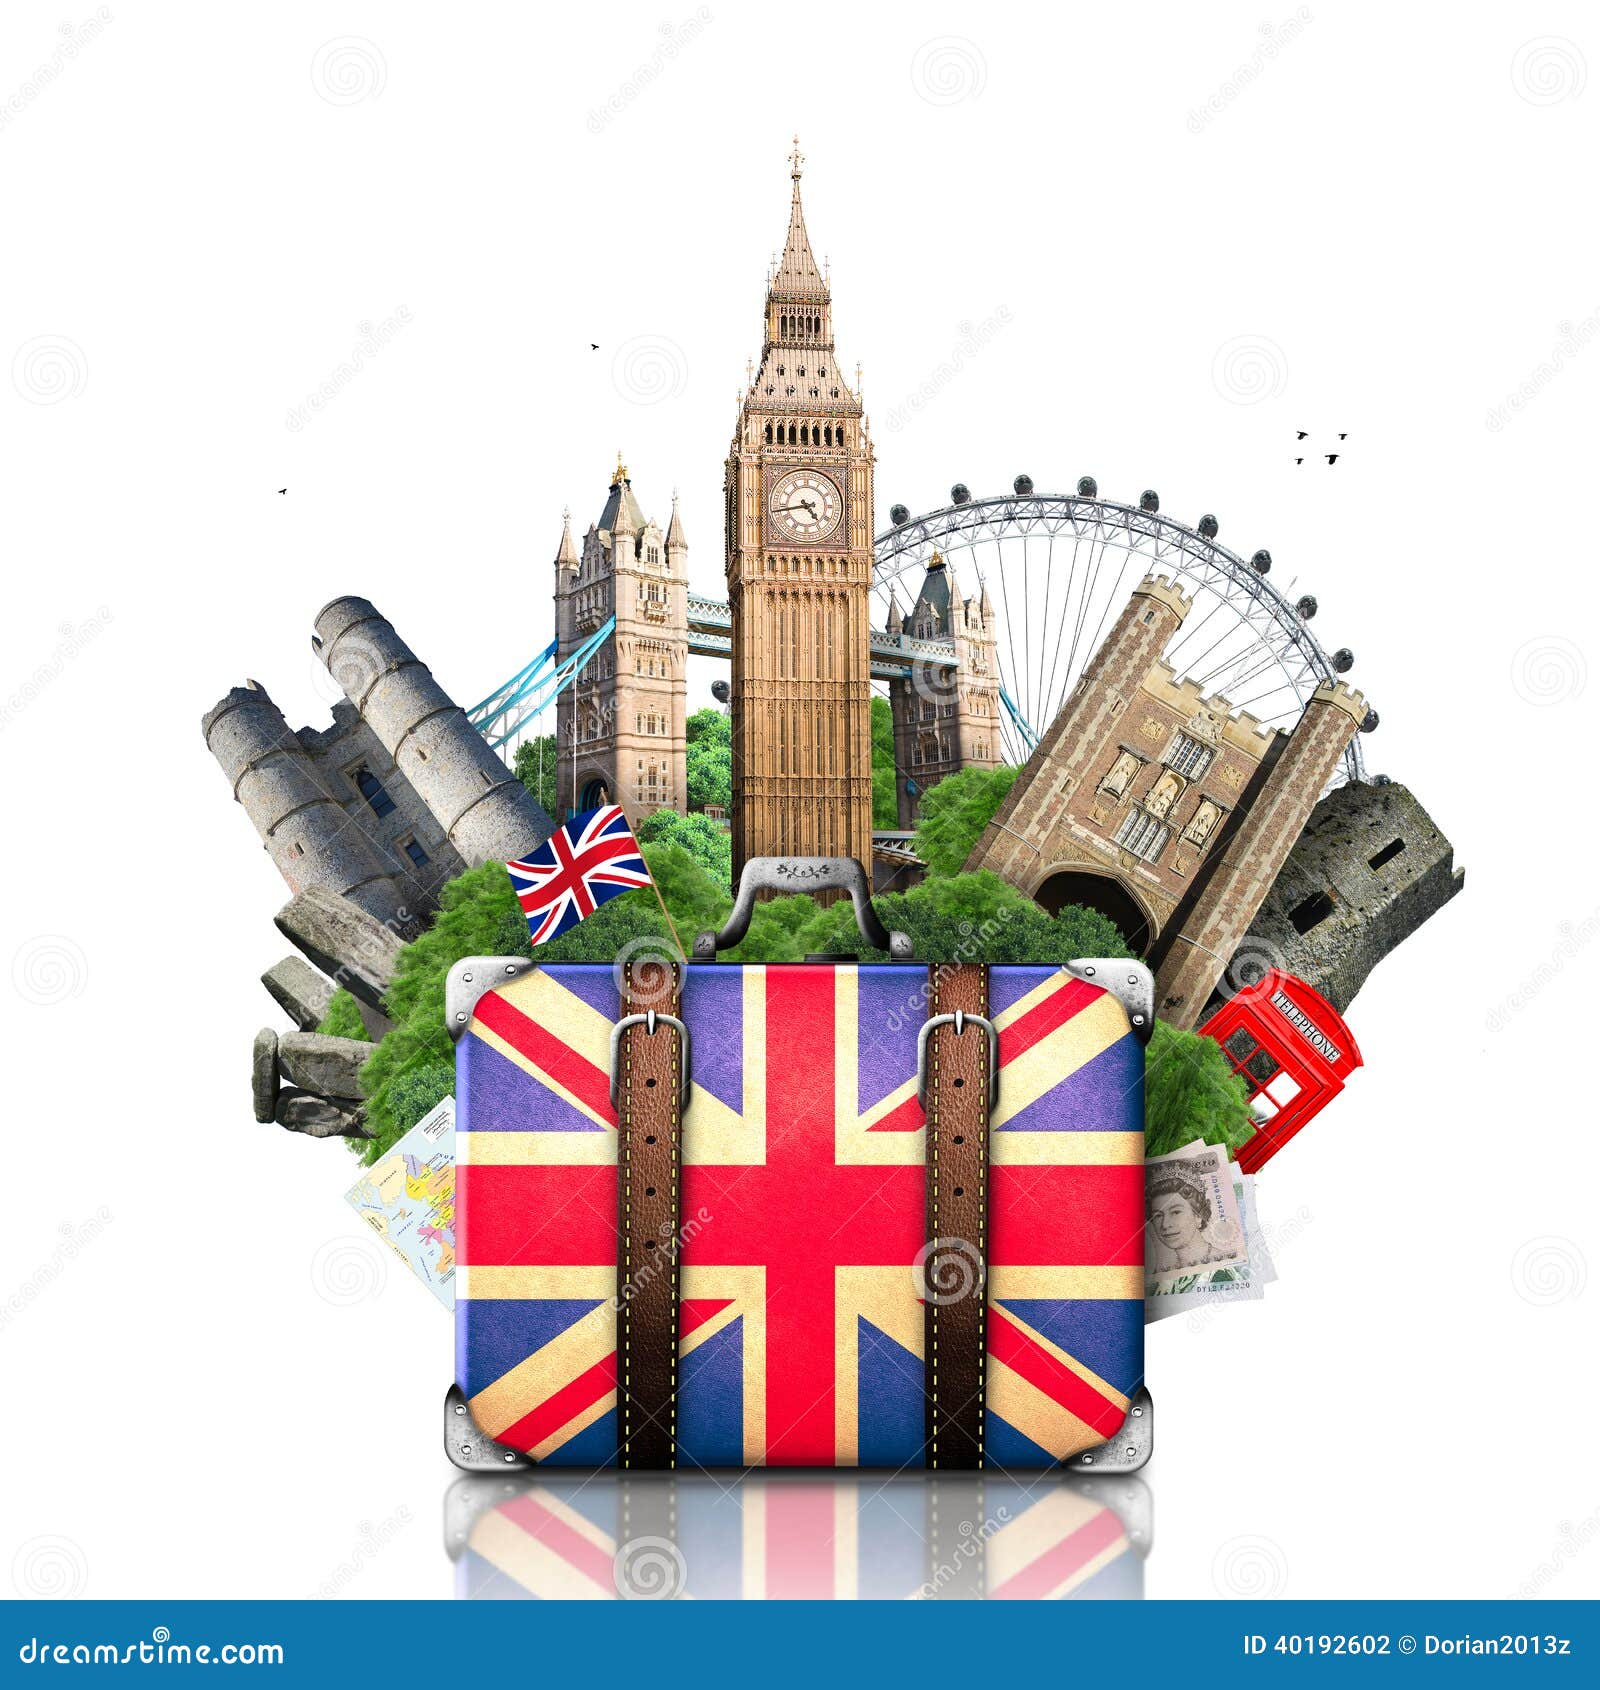 england, british landmarks